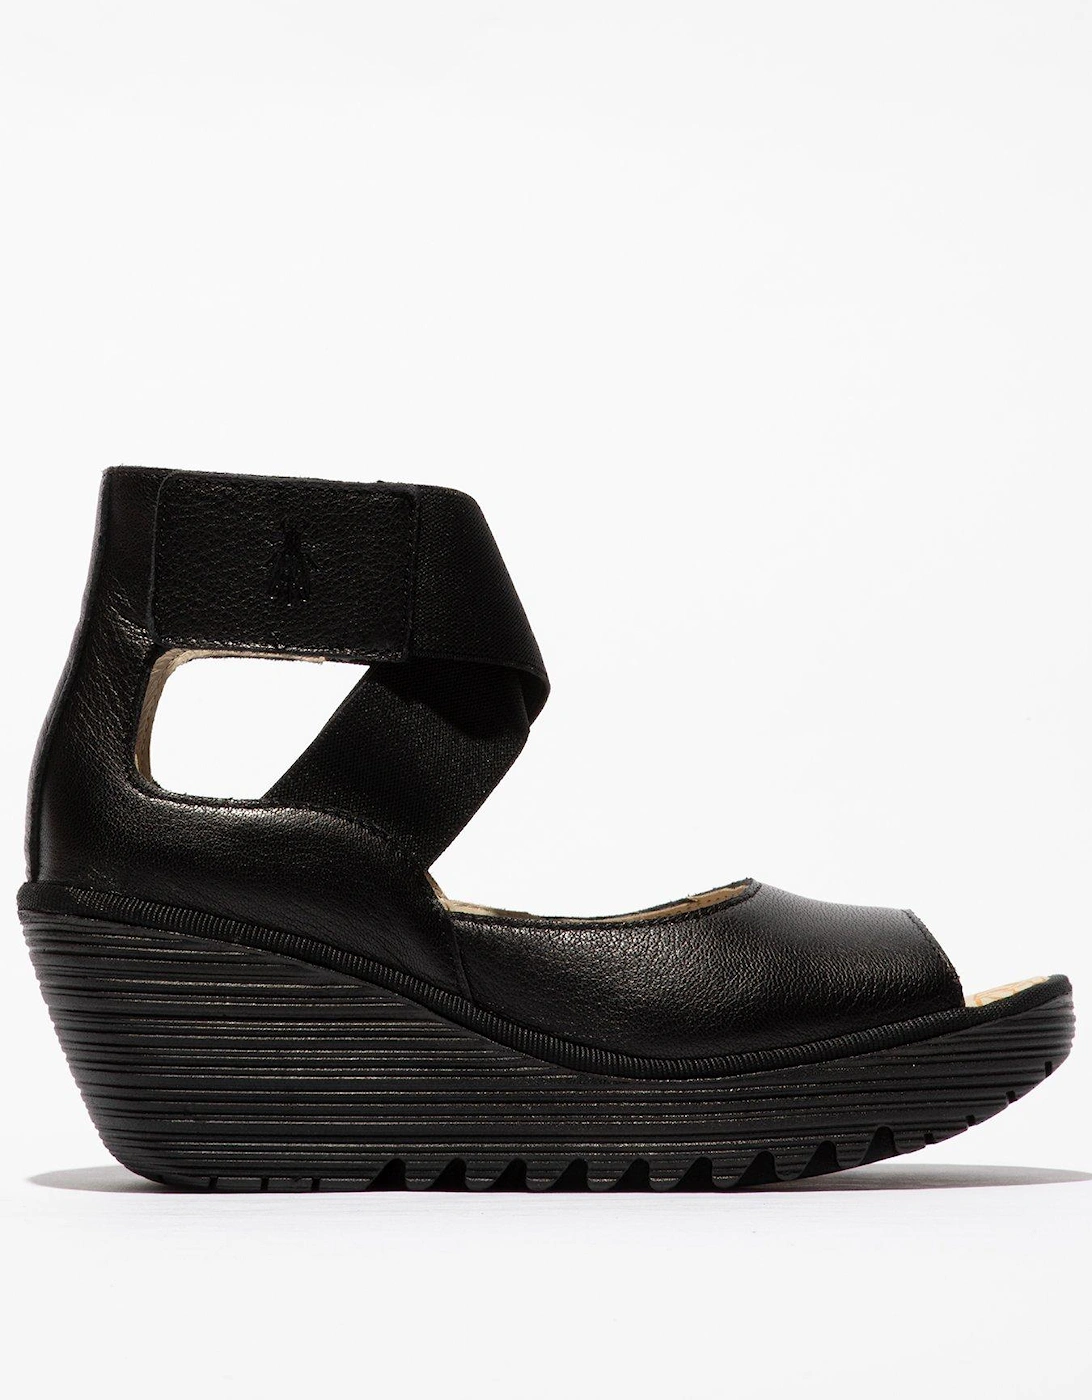 Yefi Peep Toe Wedged Ankle Strap Shoes - Black, 5 of 4